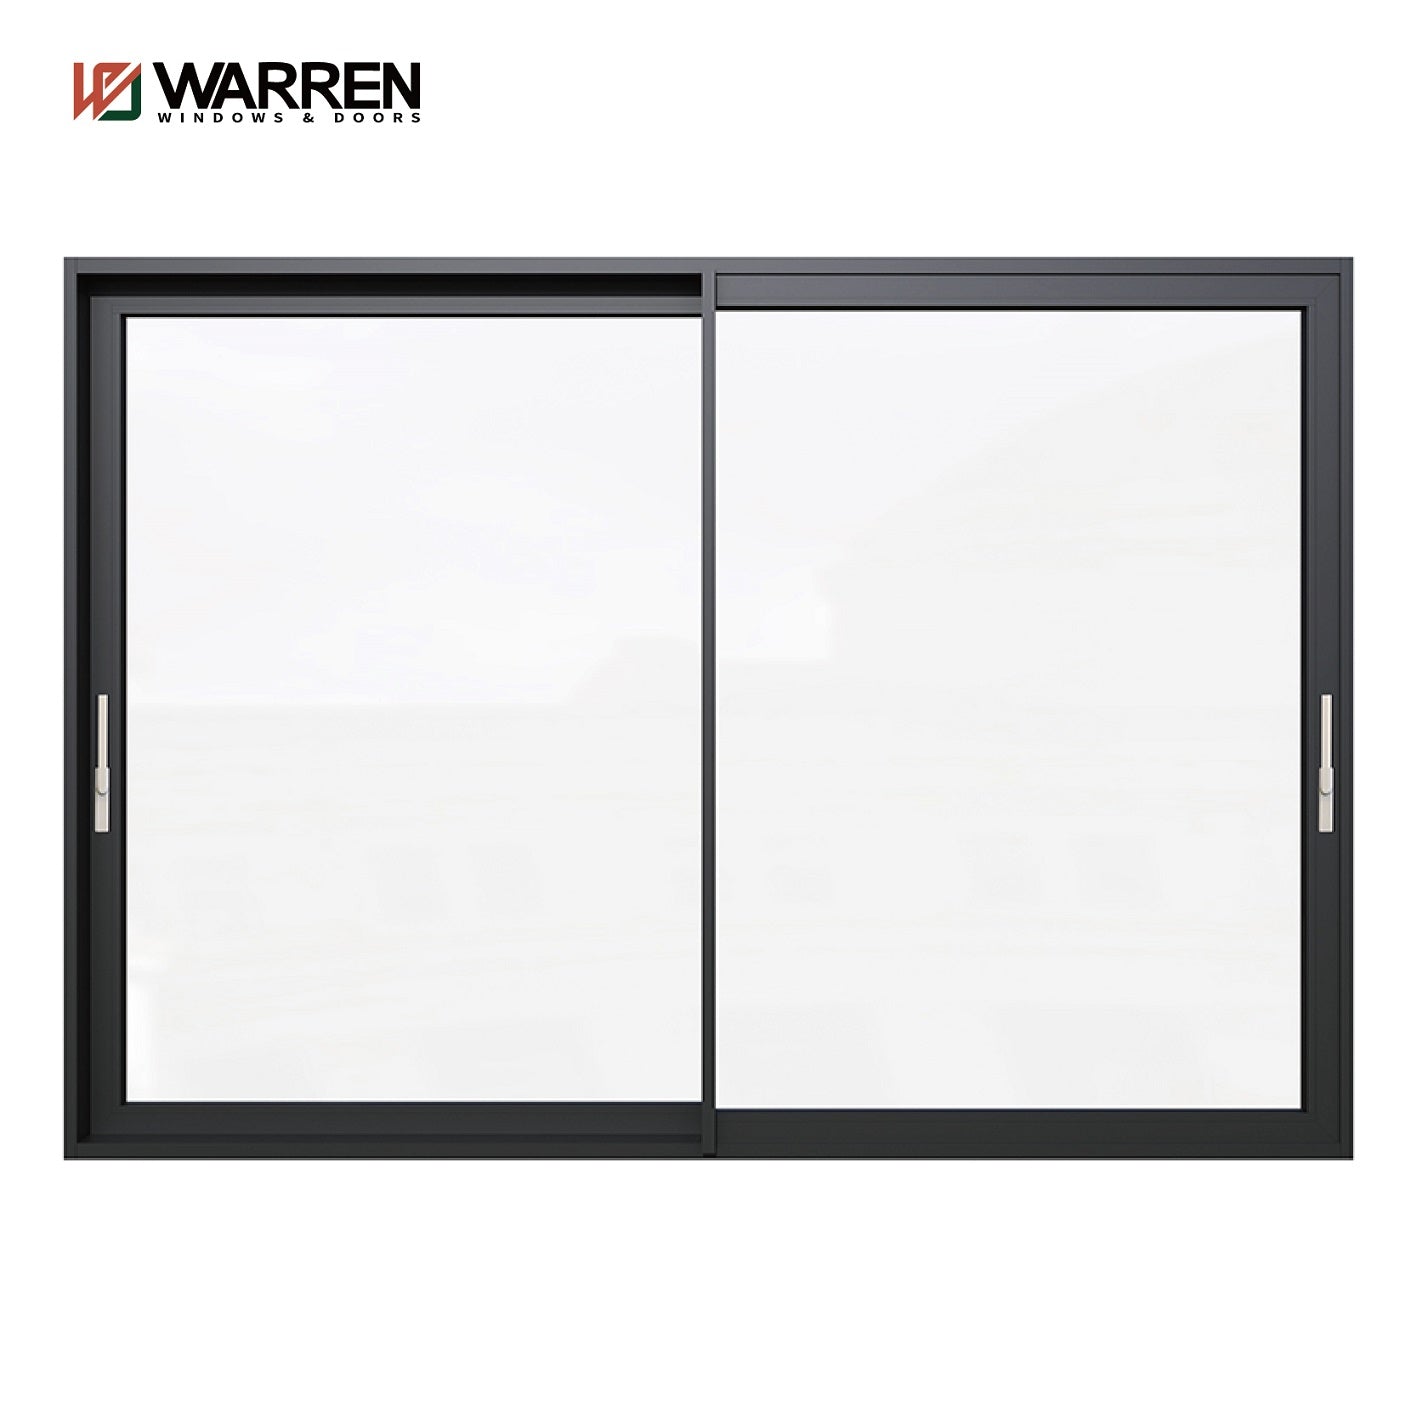 Warren Aluminium Frame Lift Sliding Doors Cheap Price Patio Iron Main Gate Design Sliding Door Used For Container House